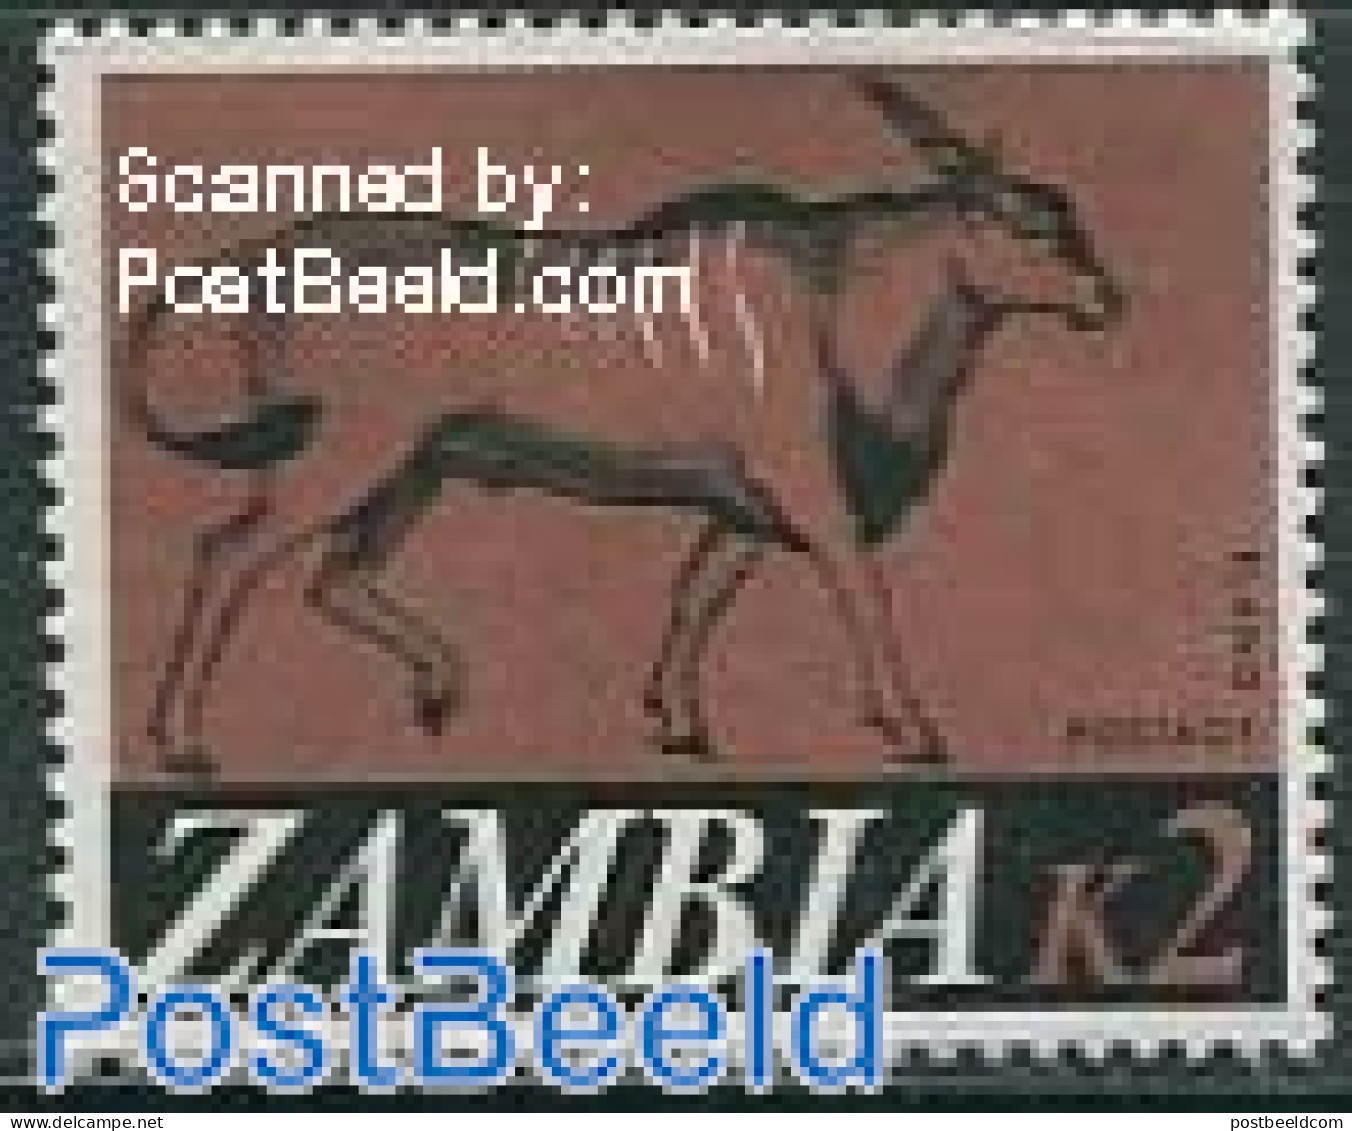 Zambia 1968 2K, Stamp Out Of Set, Mint NH, Nature - Animals (others & Mixed) - Zambie (1965-...)